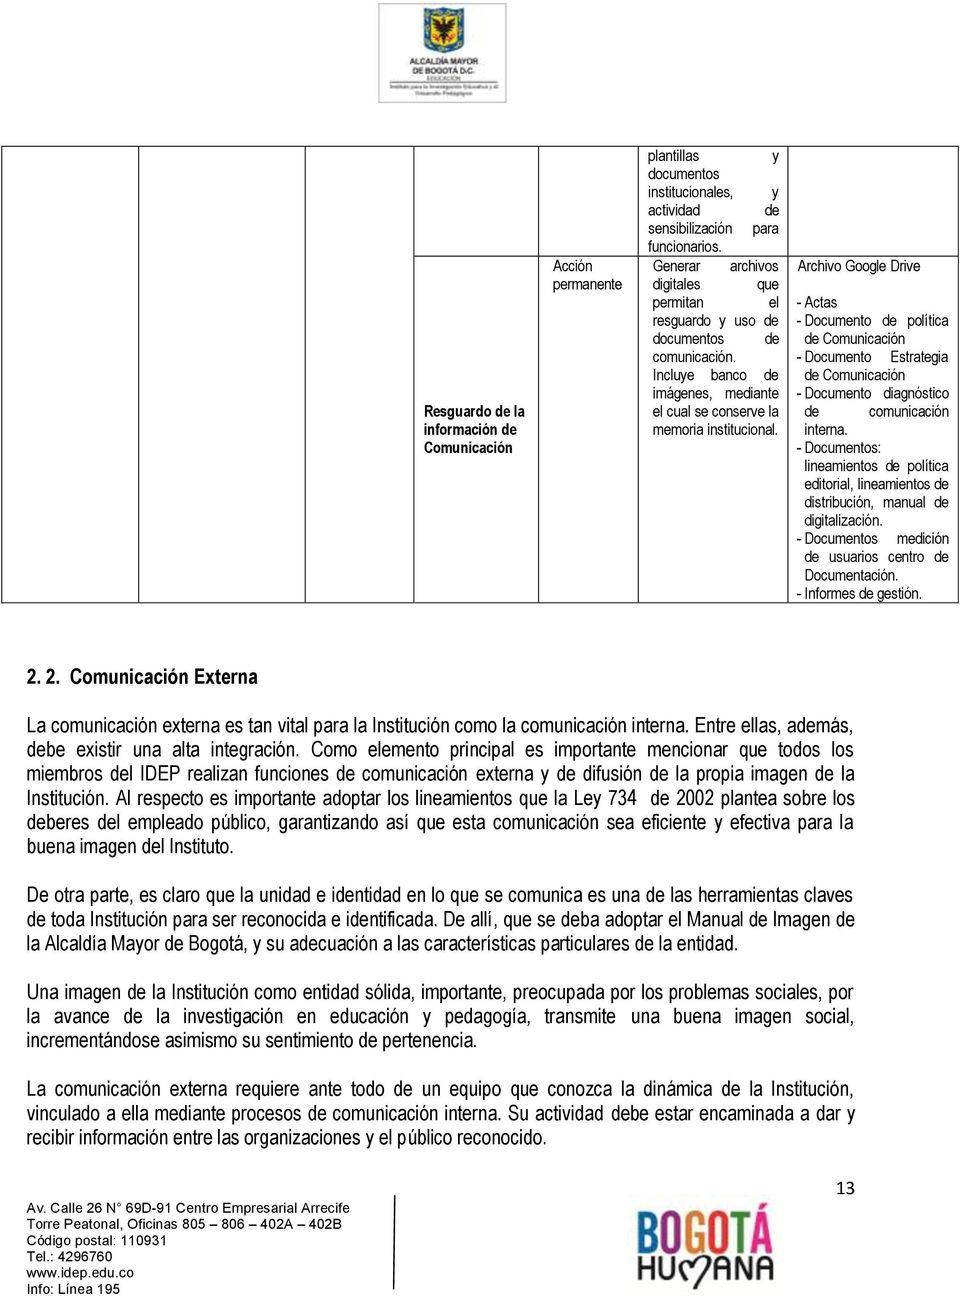 Archivo Google Drive - Actas - Documento de política de Comunicación - Documento Estrategia de Comunicación - Documento diagnóstico de comunicación interna.